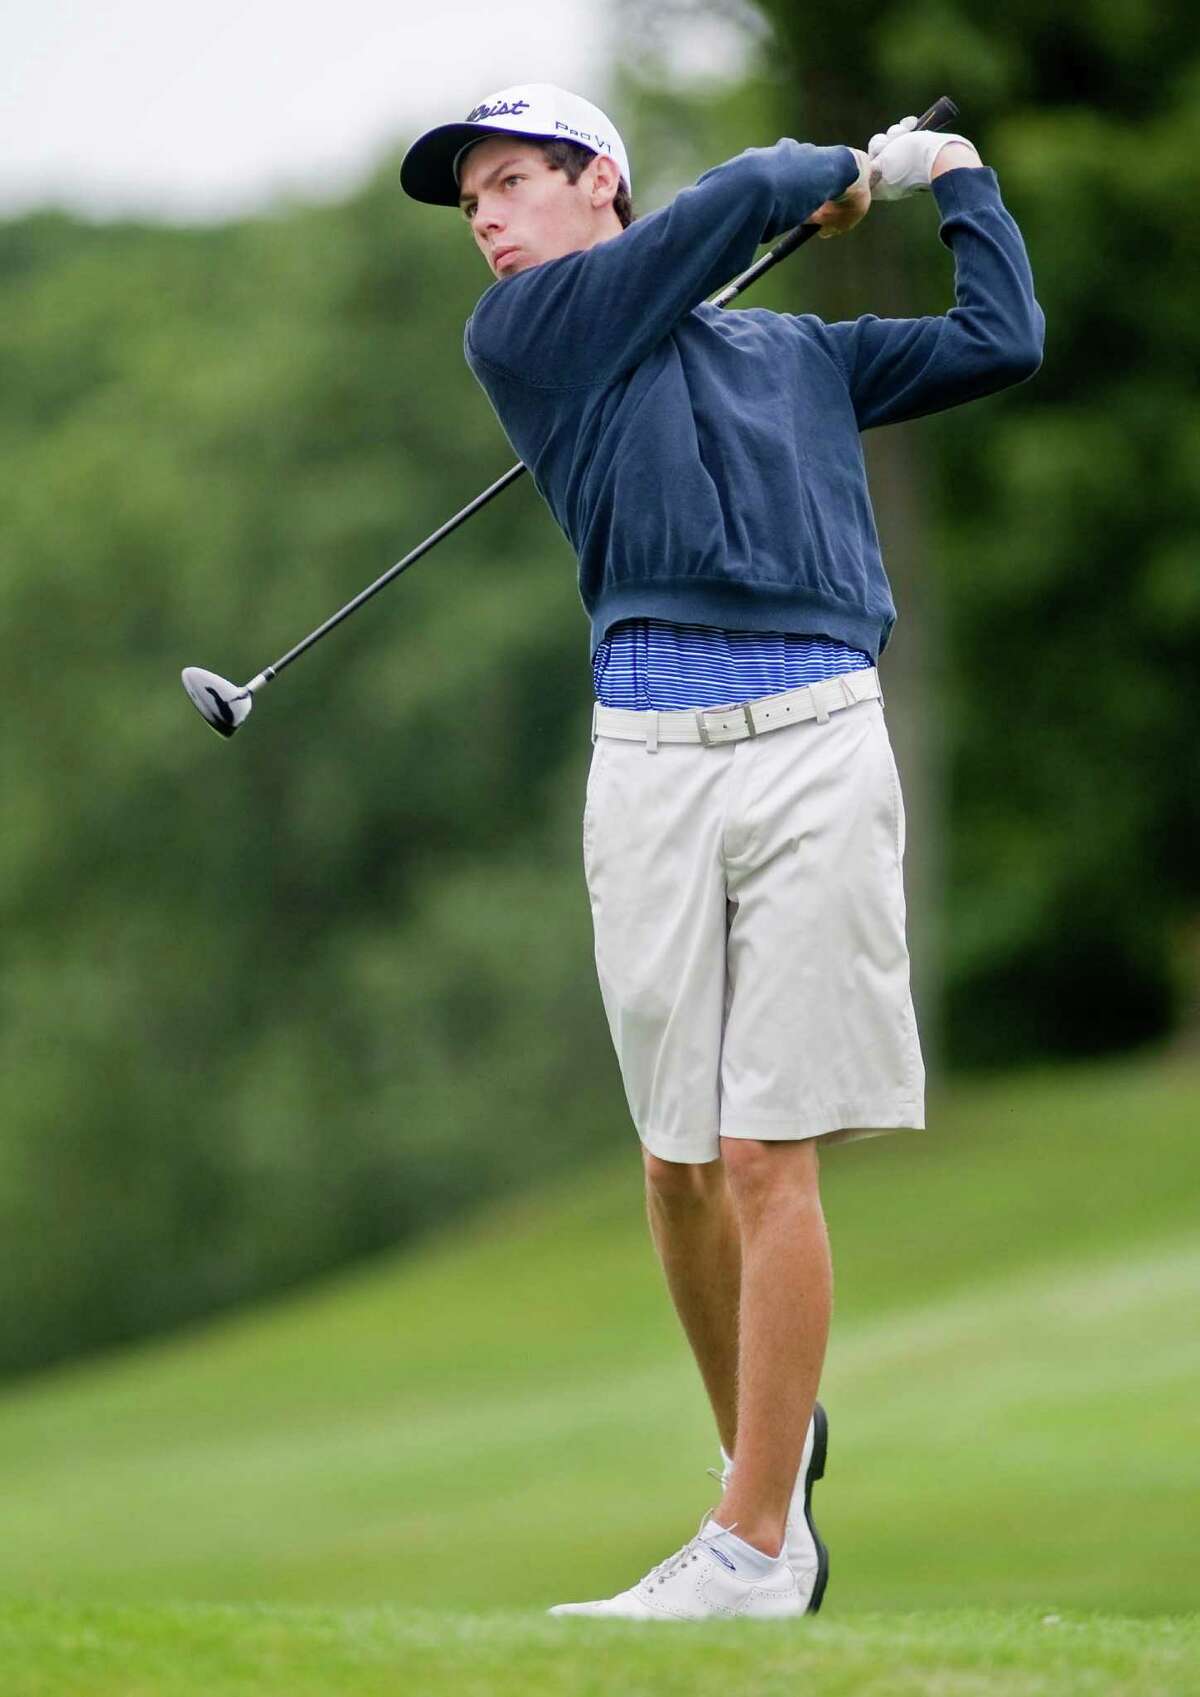 Max Theodorakis drives the ball at the Danbury Amateur golf tournament at Richter Park. Saturday, July 19, 2014